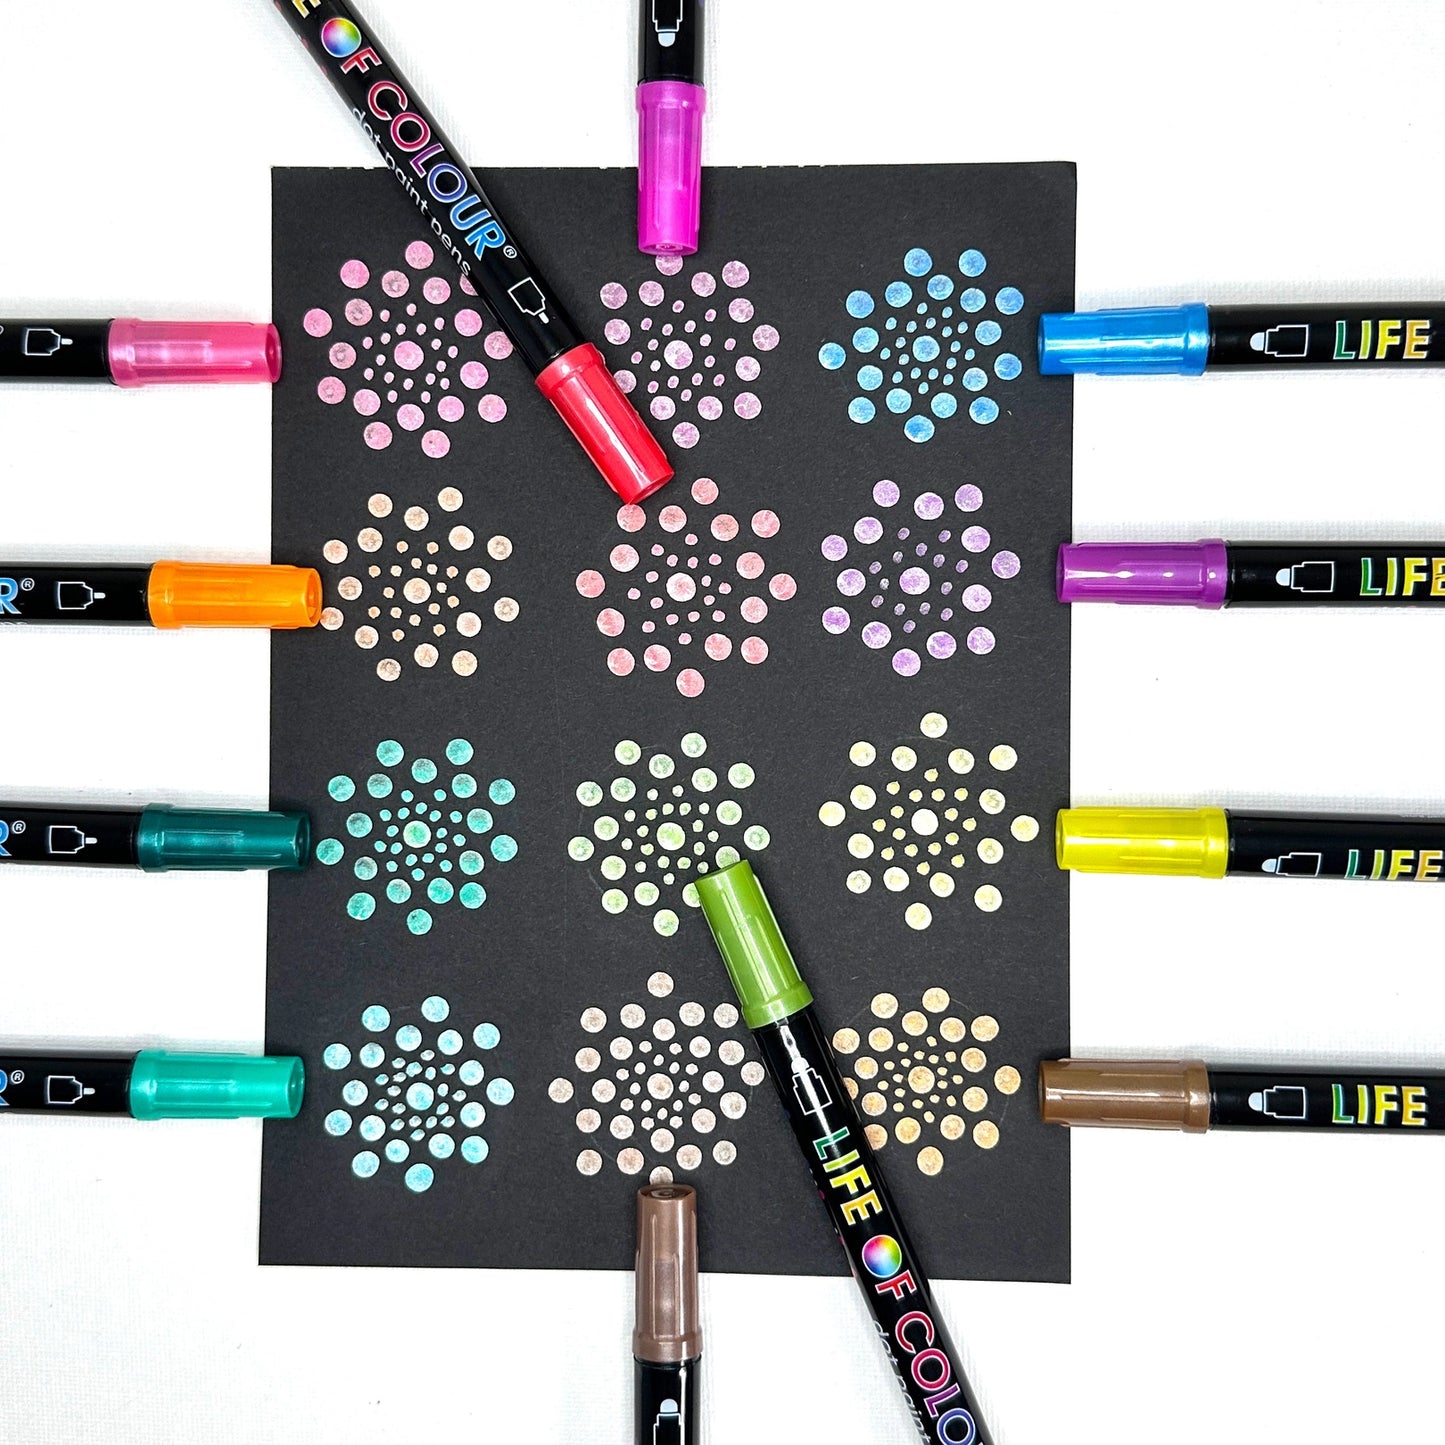 Dot Markers Acrylic Paint Pens - Set of 12 - Metallic